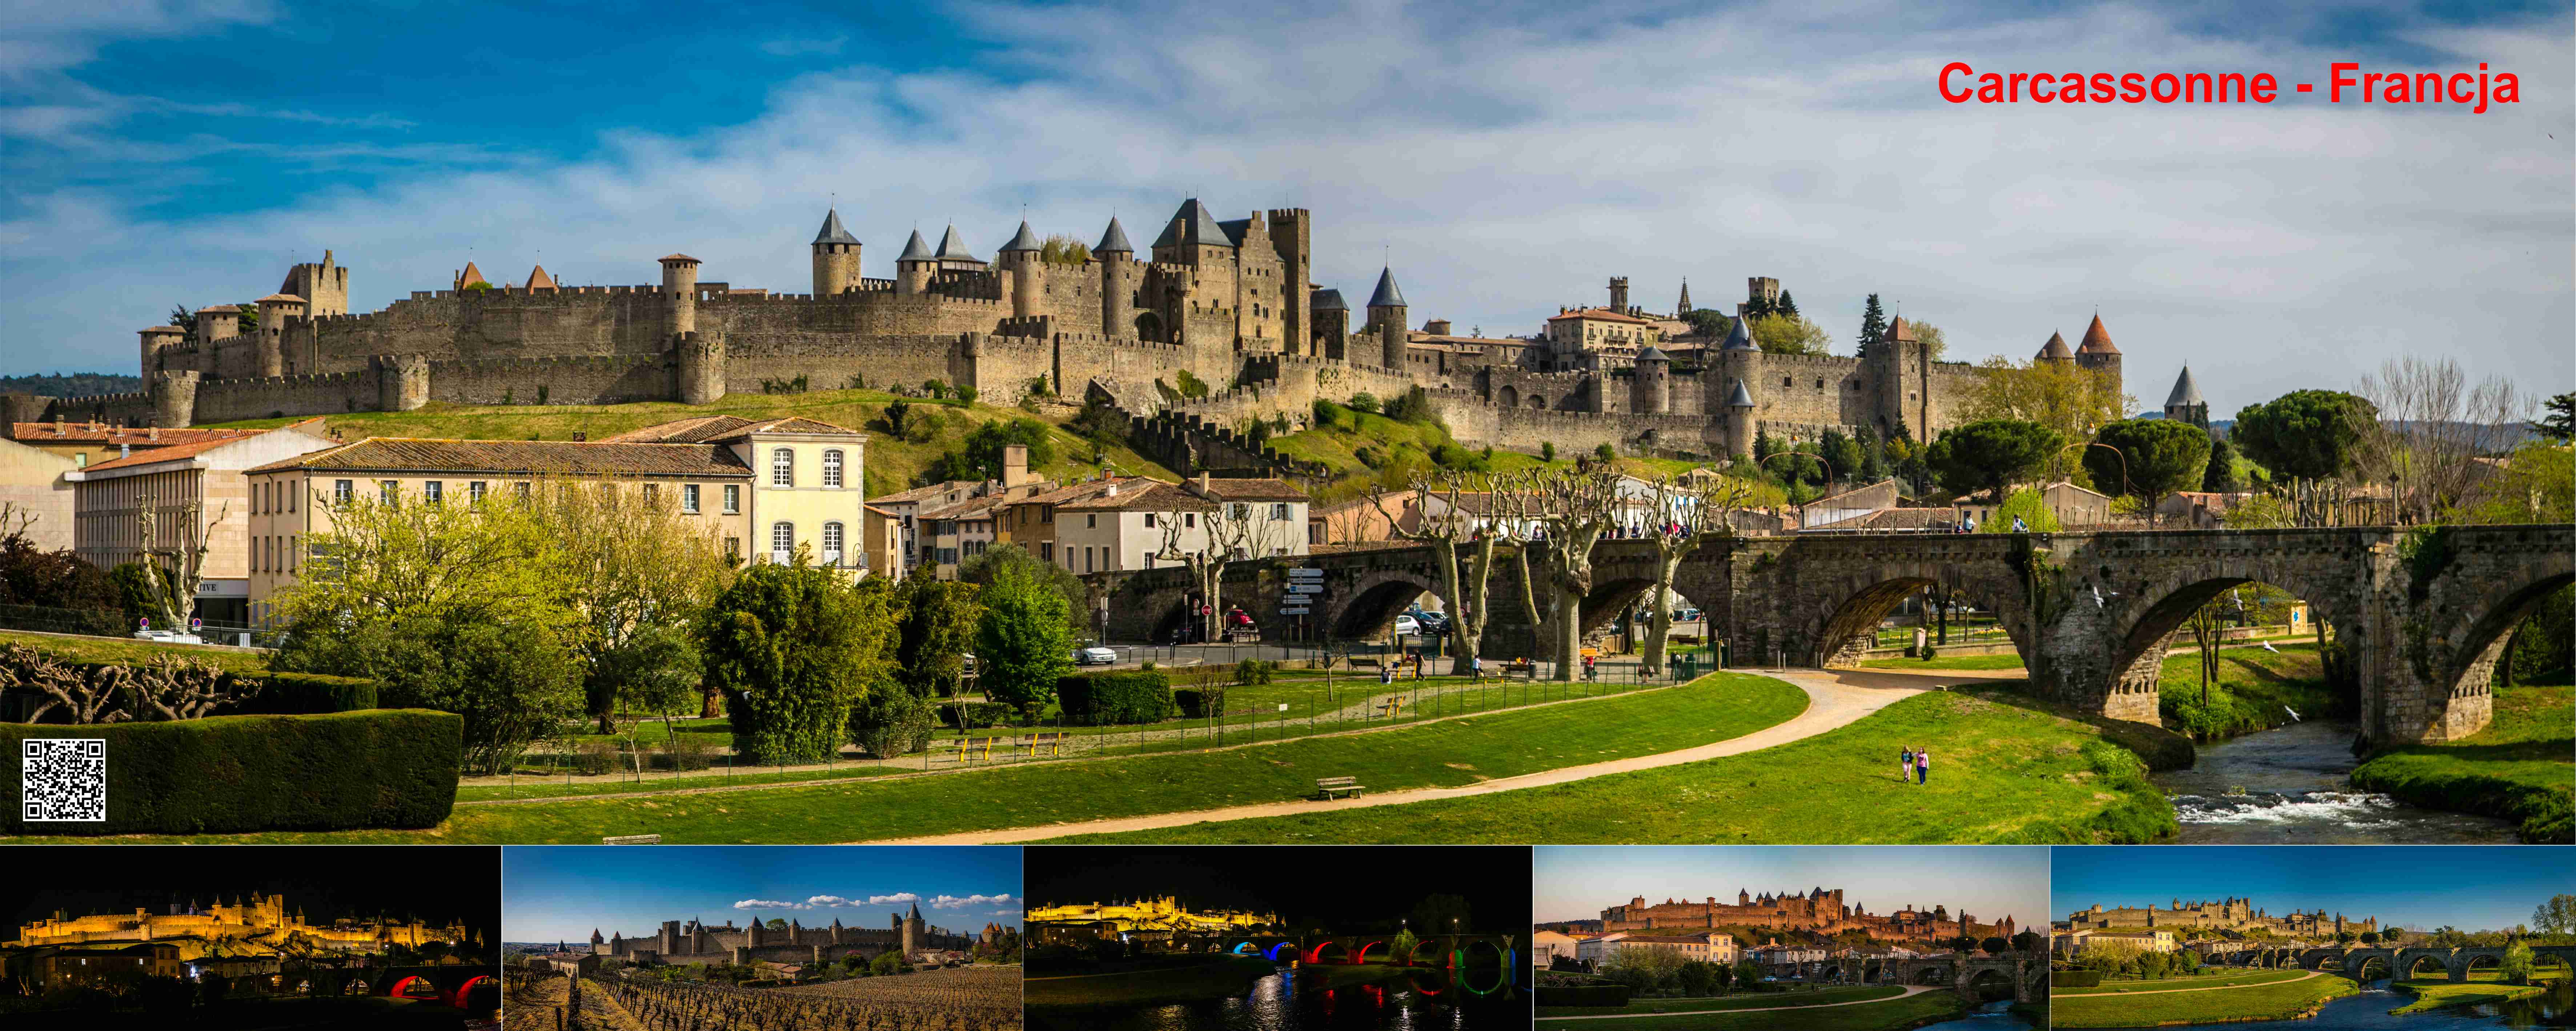 01 Carcassonne